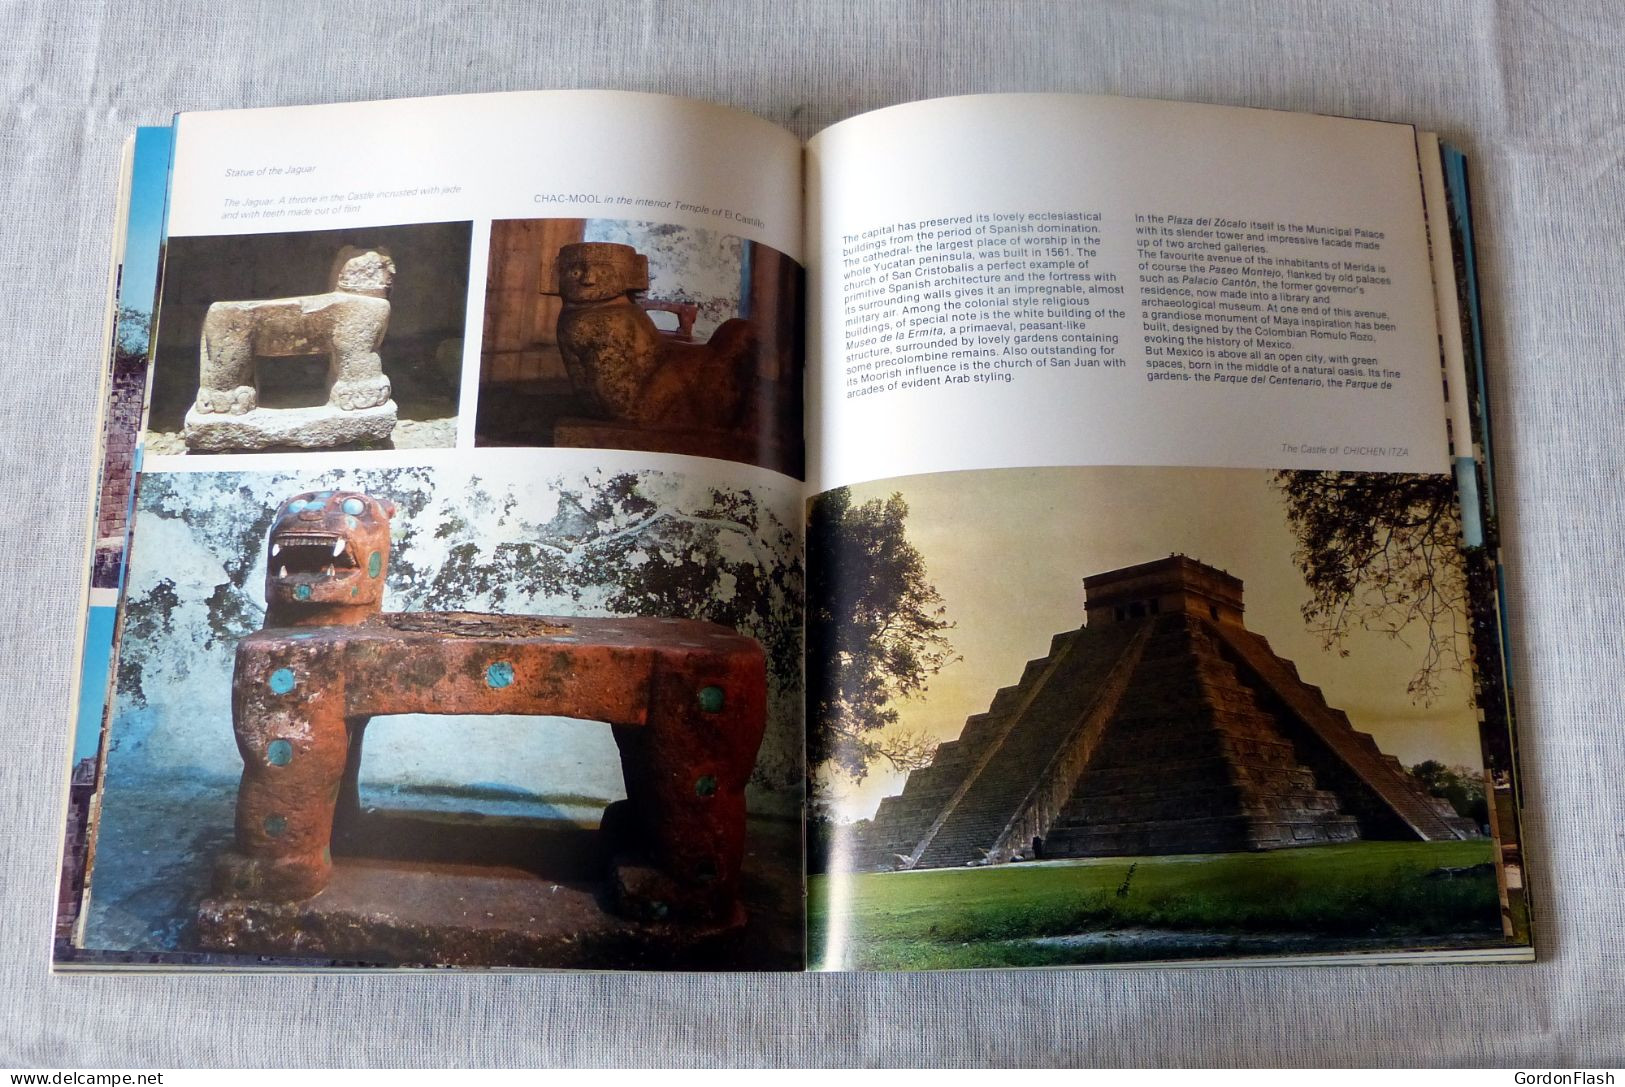 Livre : Yucatan And The Maya Civilization - Culture